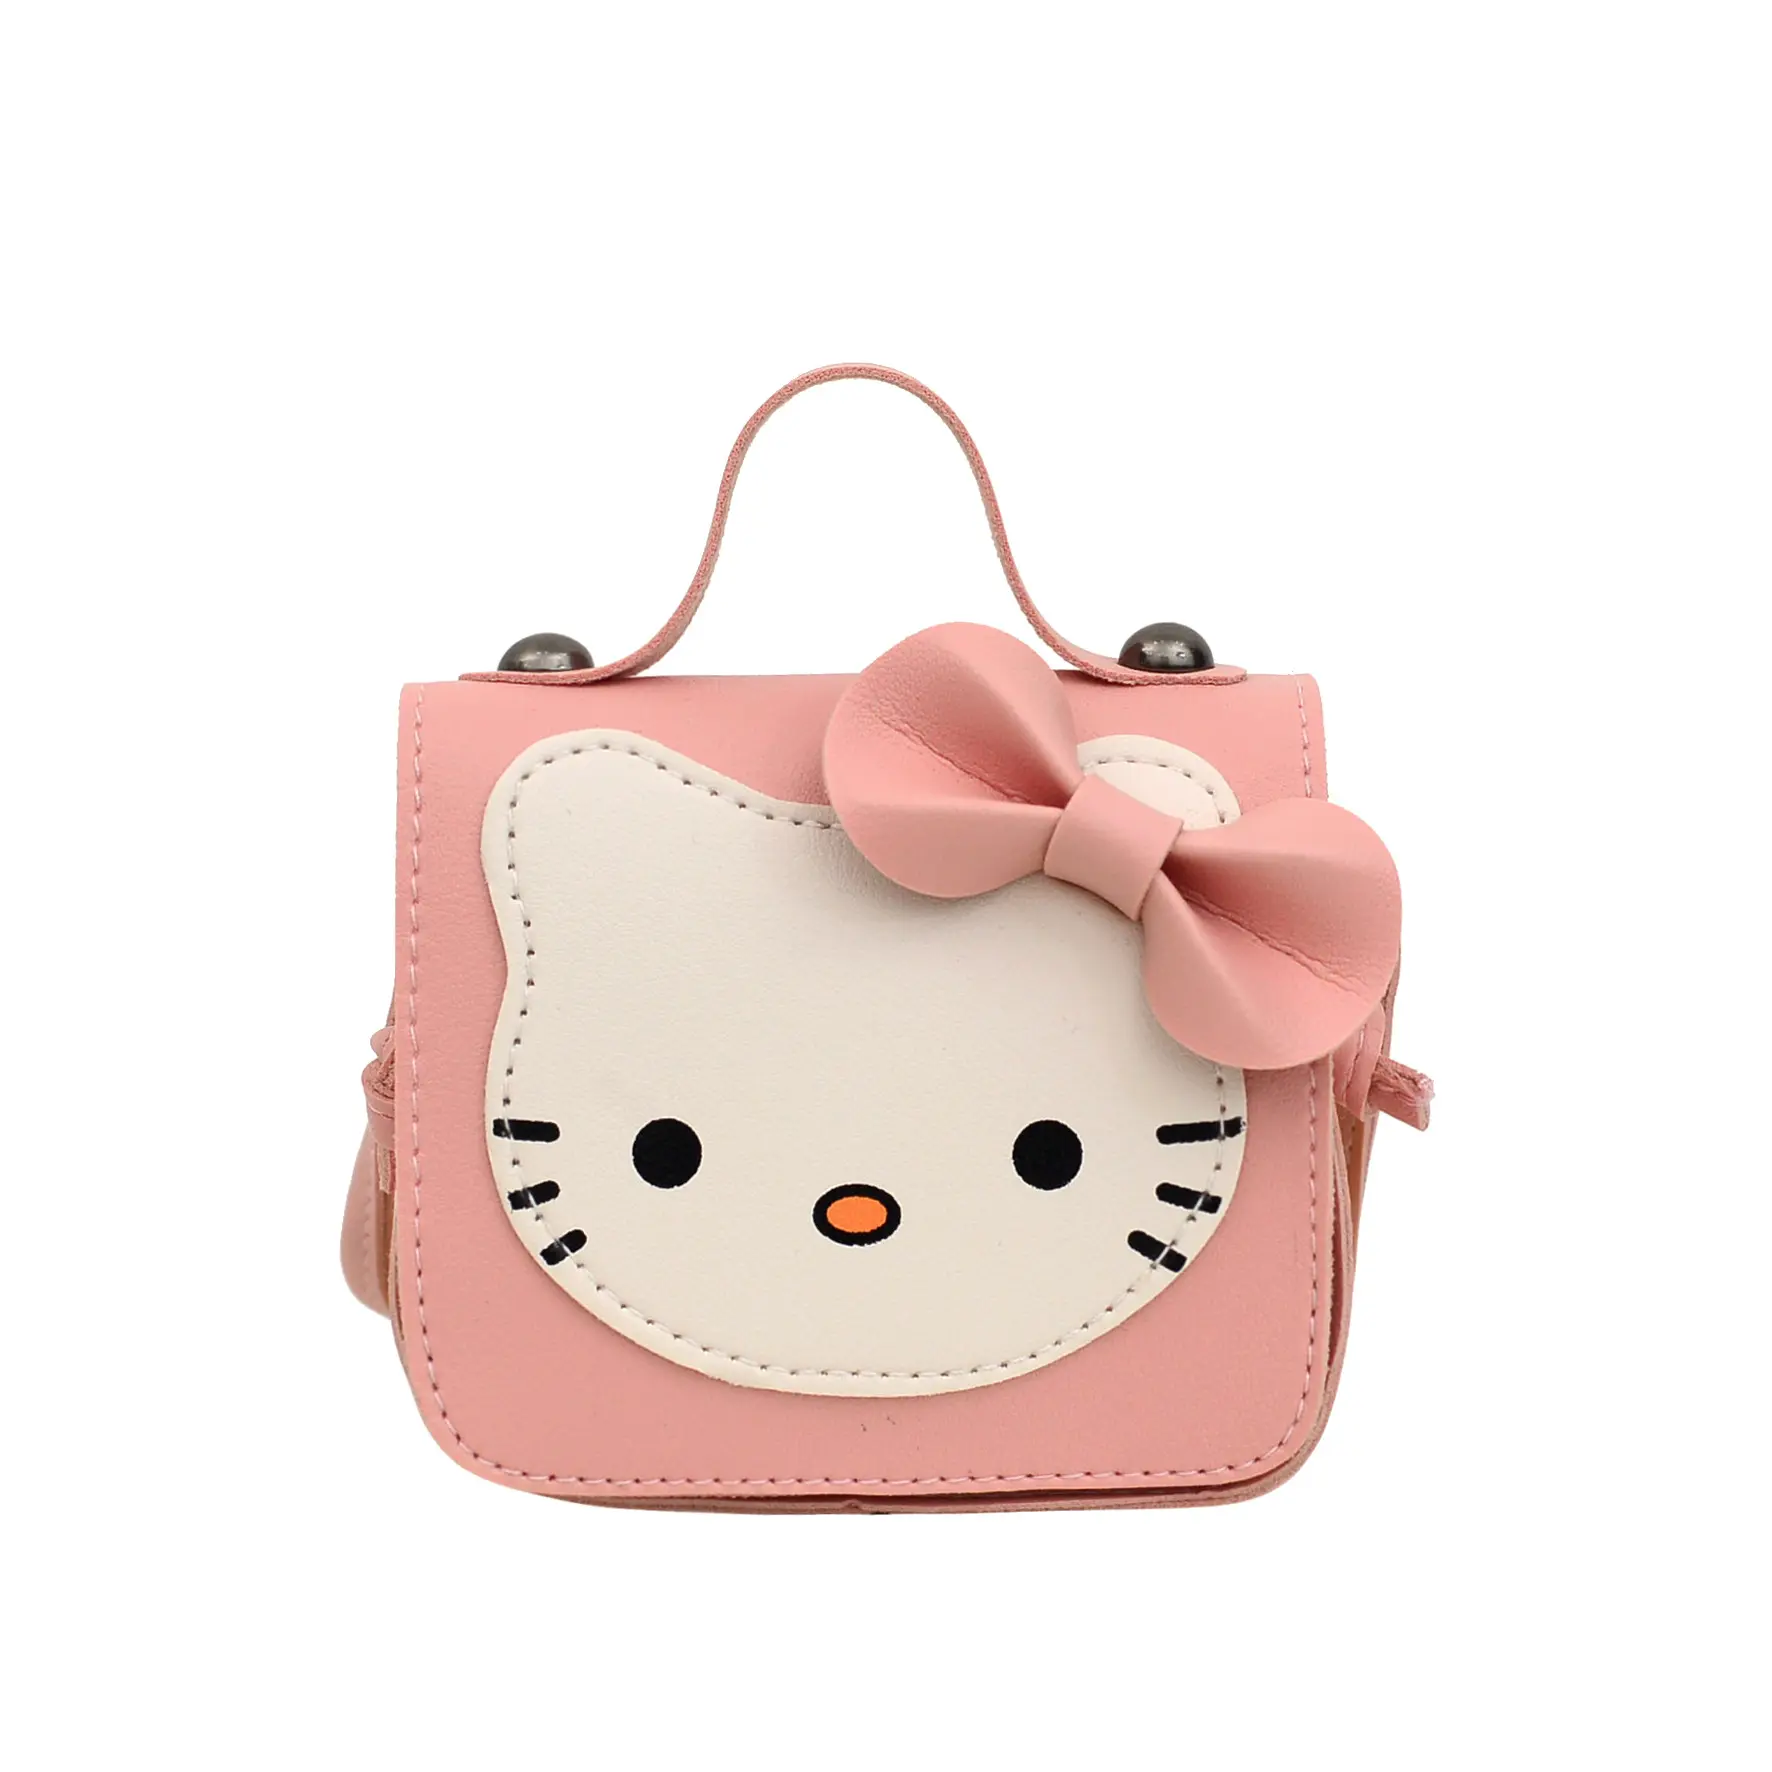 Mini Children Bag Kids Coin Purse Wallet Fashion Girls PU Leather Handbags Children's Shoulder Bags Kitty Cat